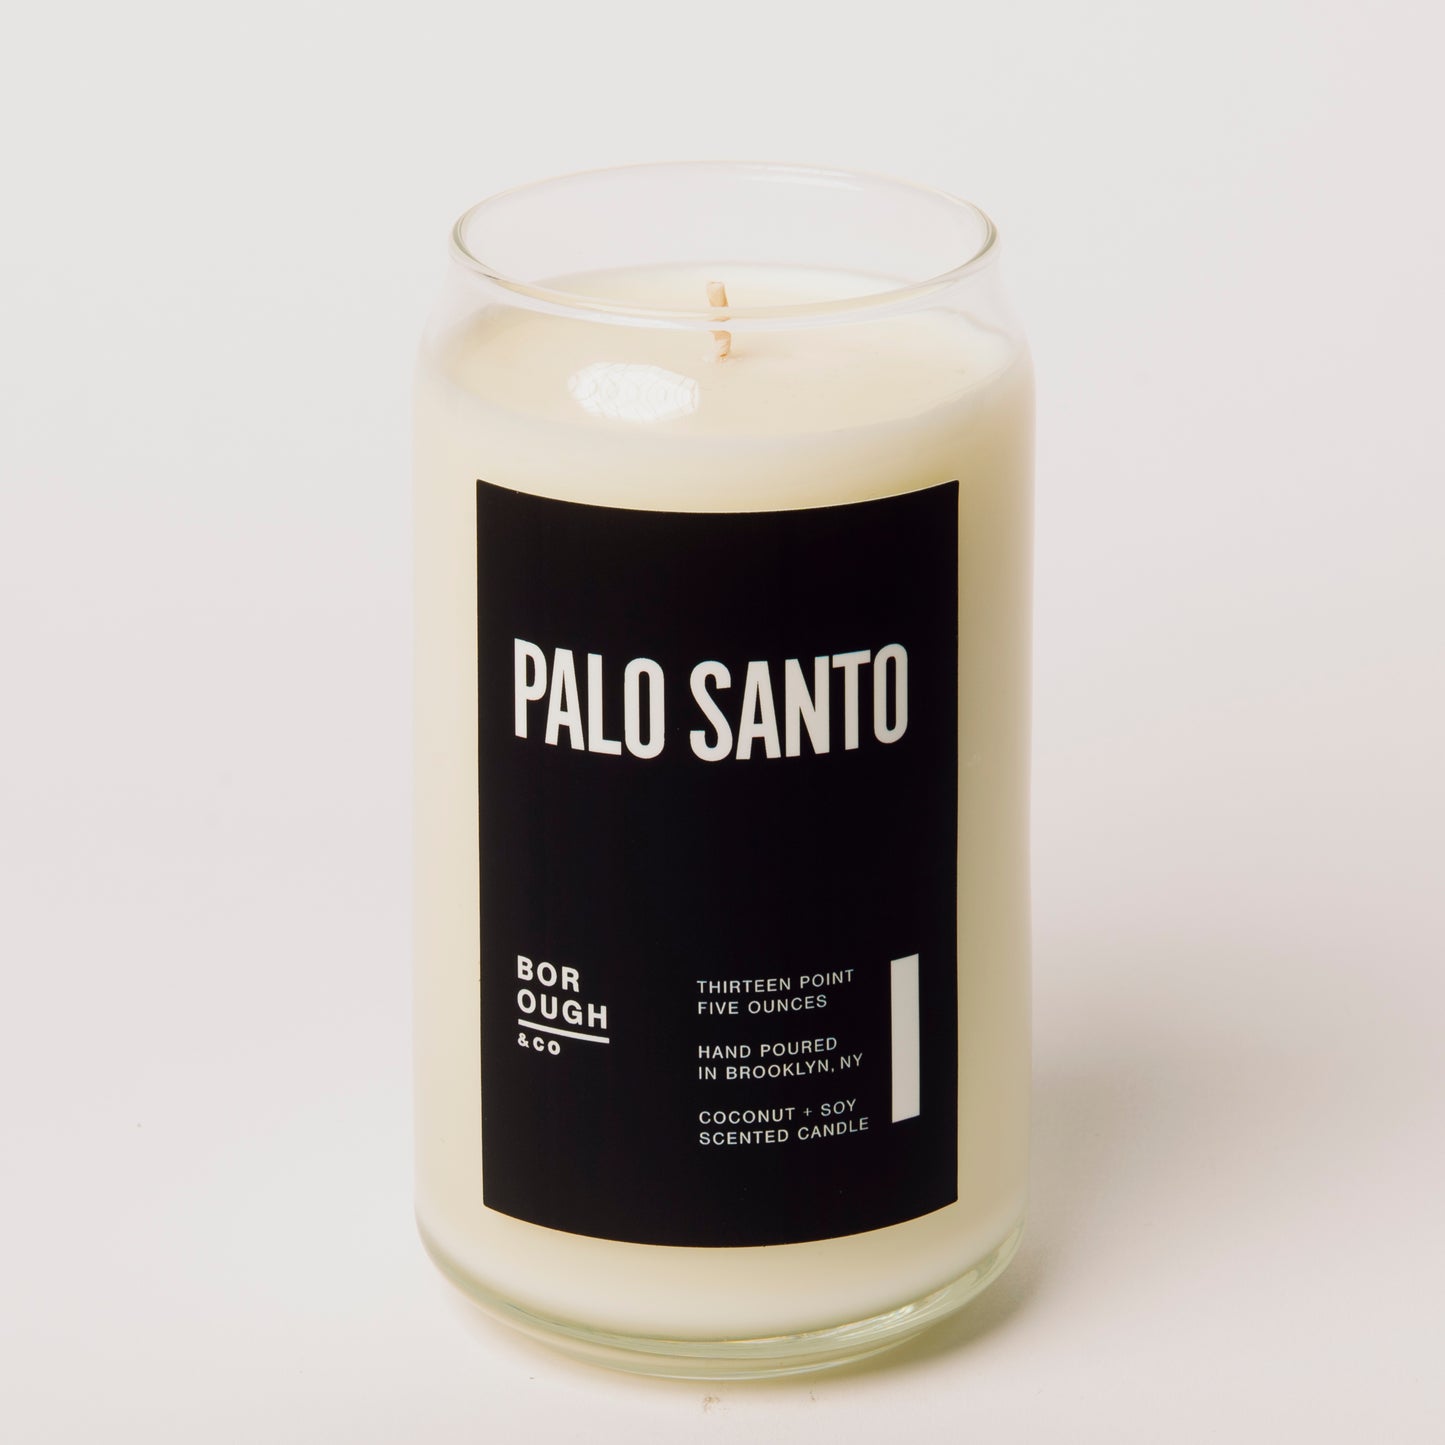 Palo Santo Longevity Candle